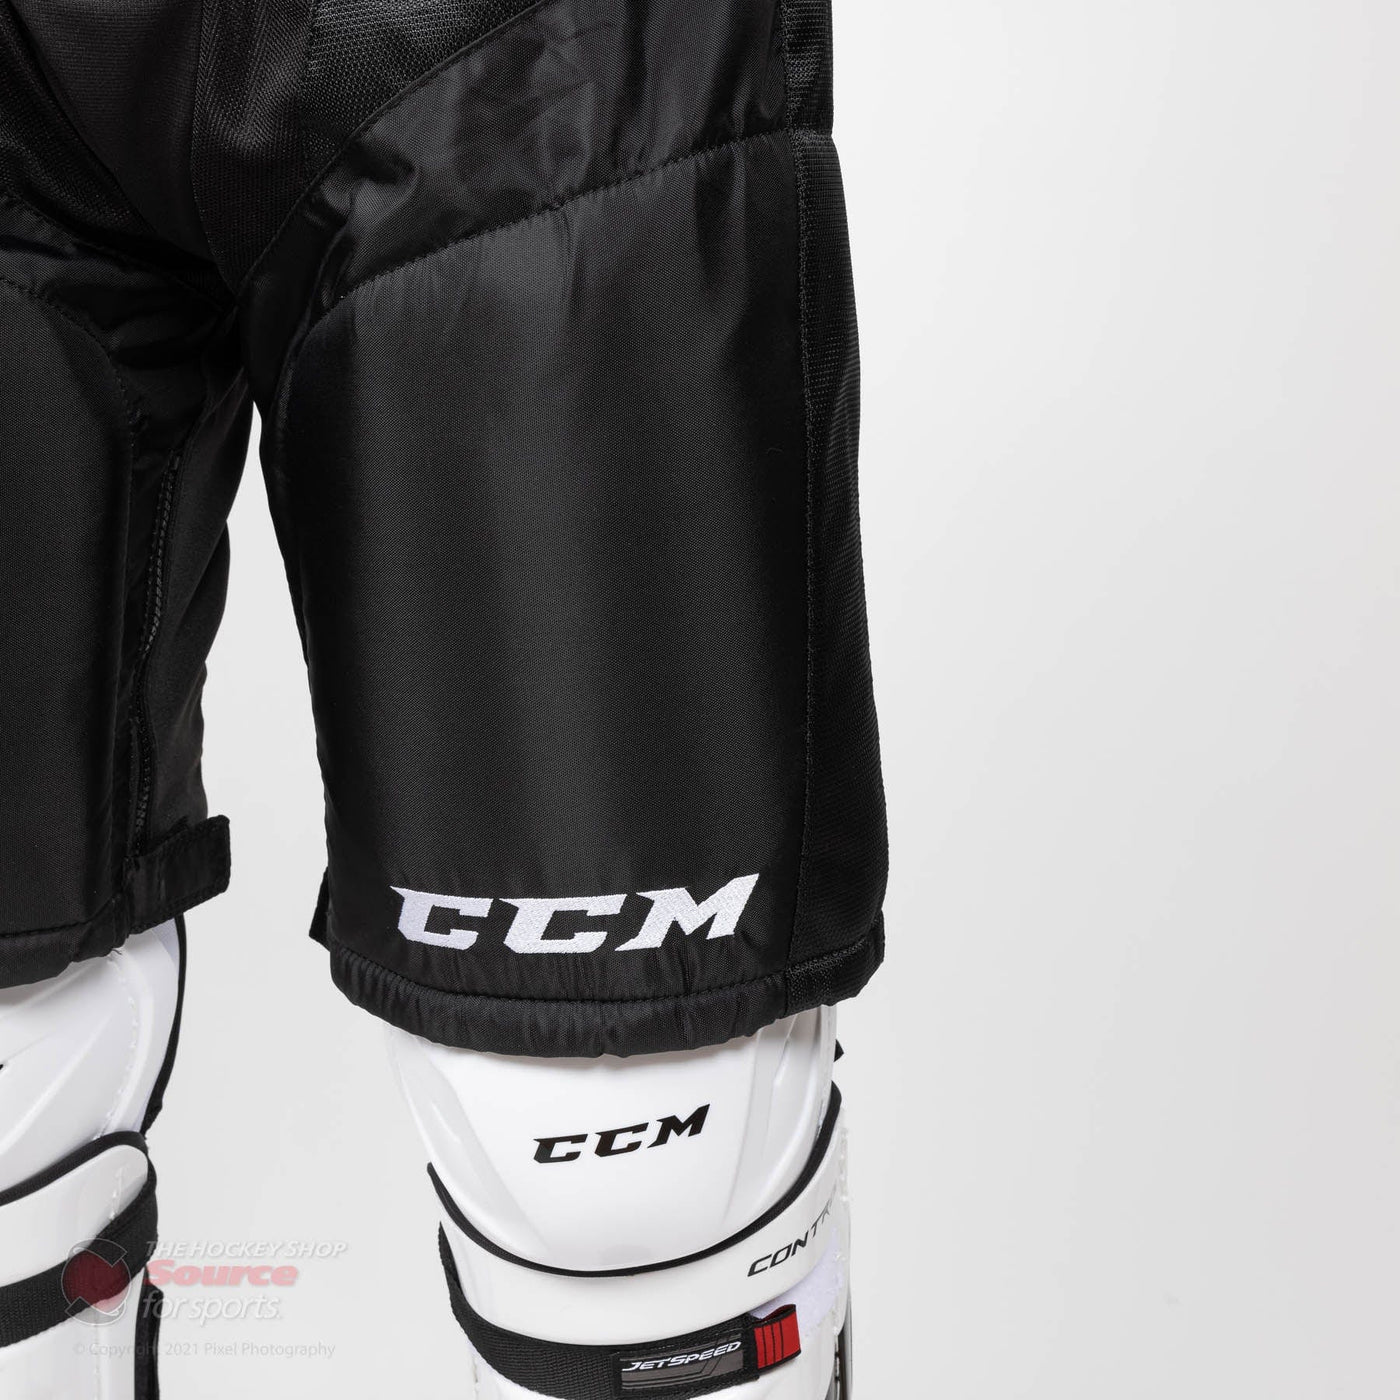 CCM Jetspeed Control Senior Hockey Pants